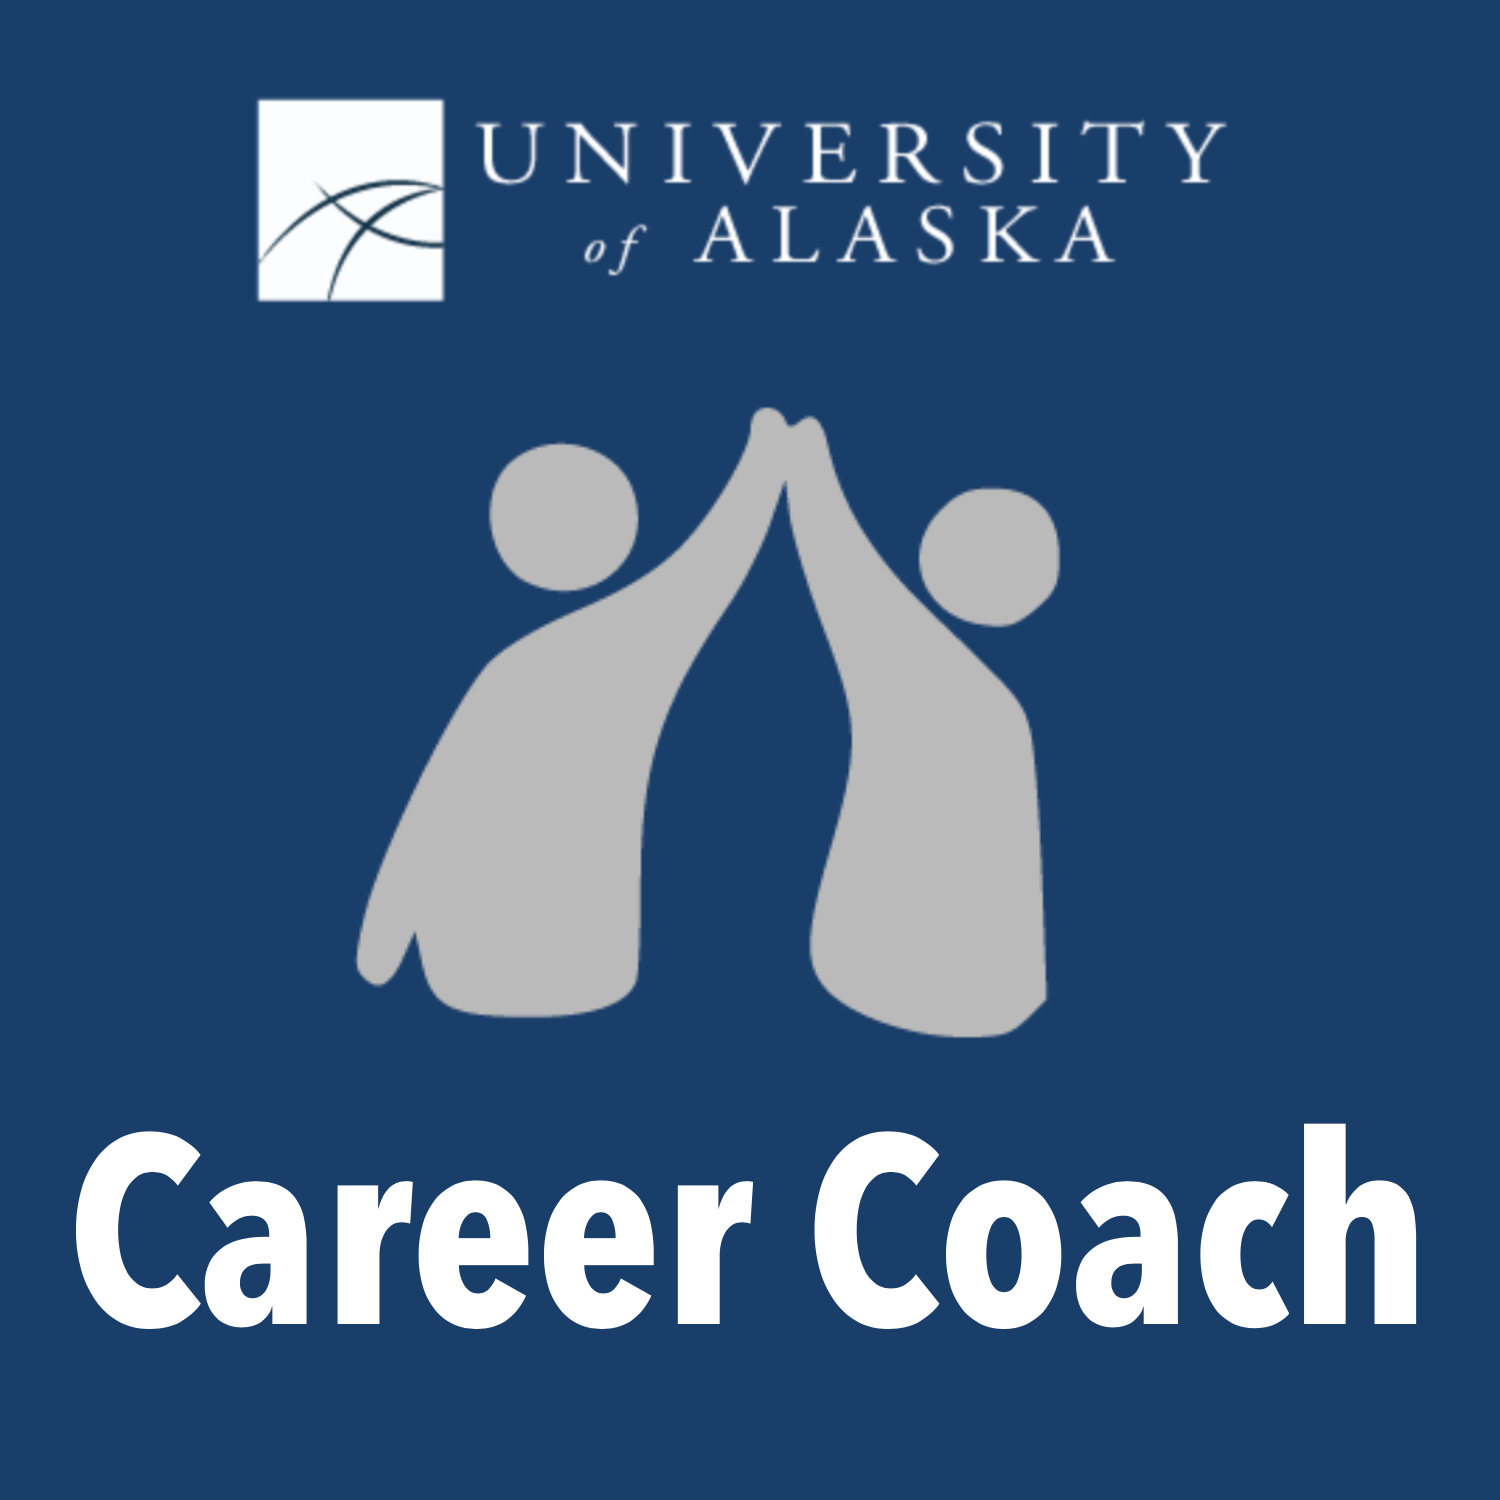 Career Coach logo